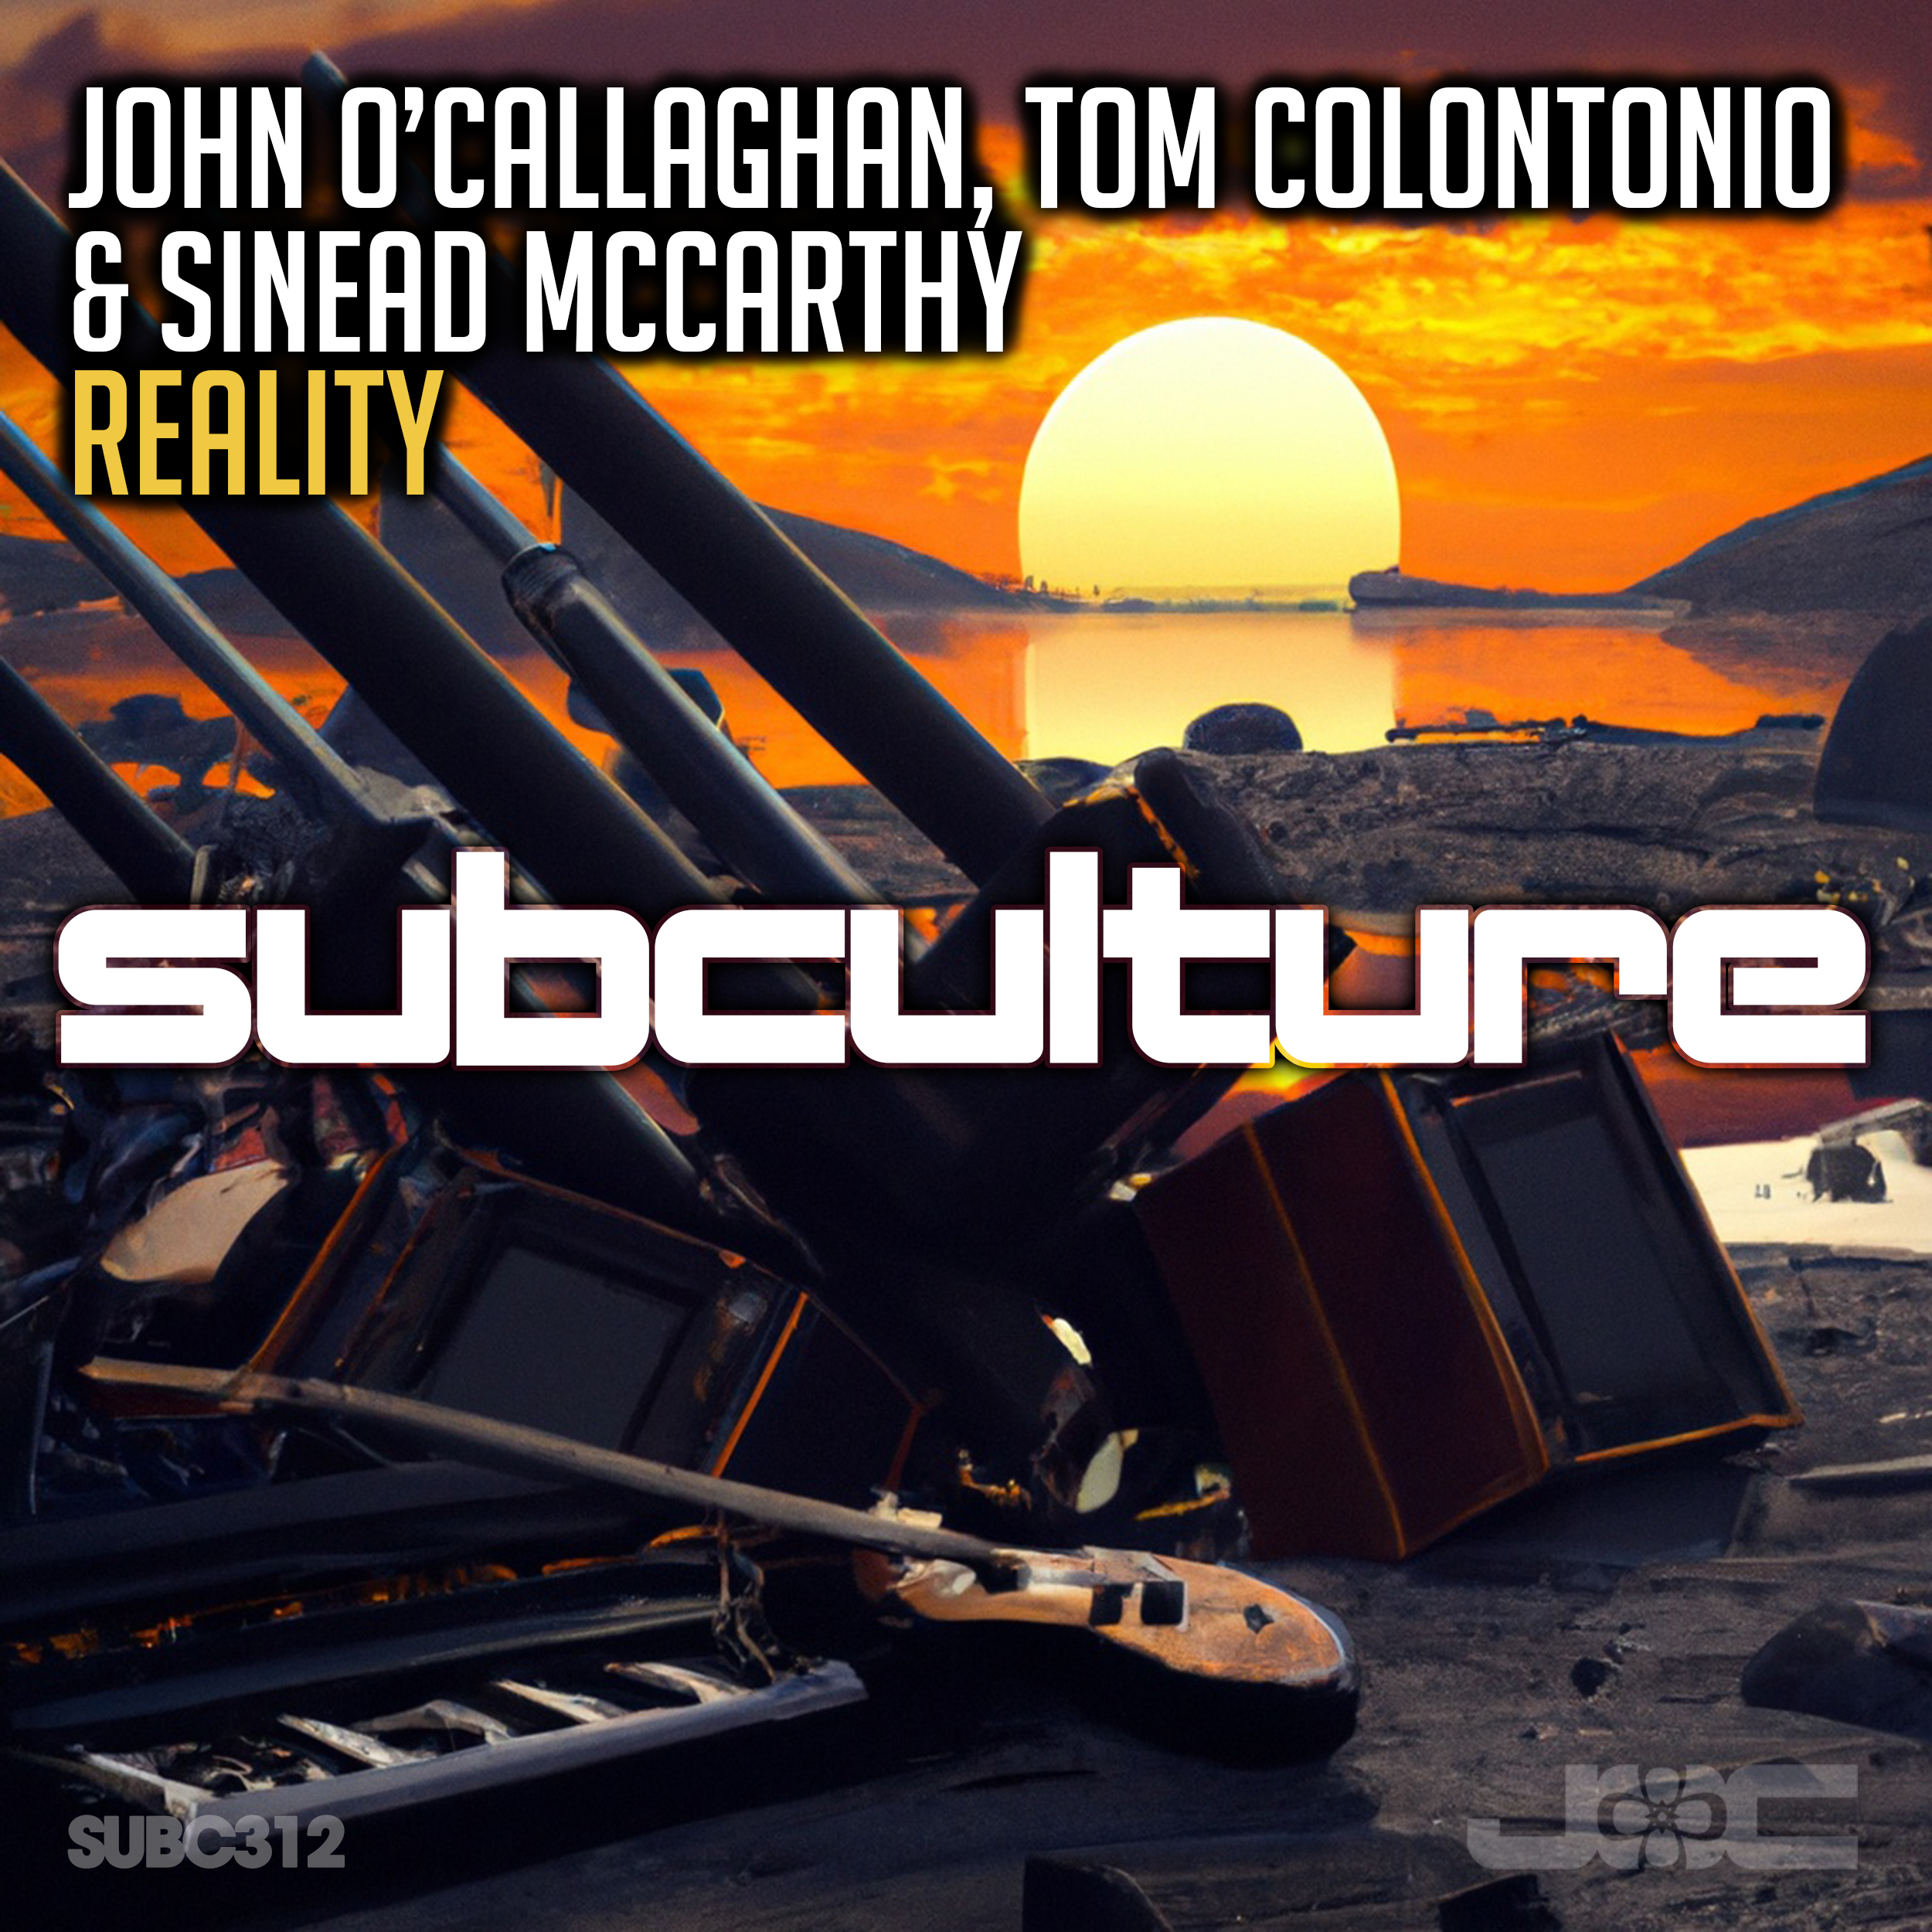 John O'Callaghan, Tom Colontonio and Sinead McCarthy presents Reality on Black Hole Recordings